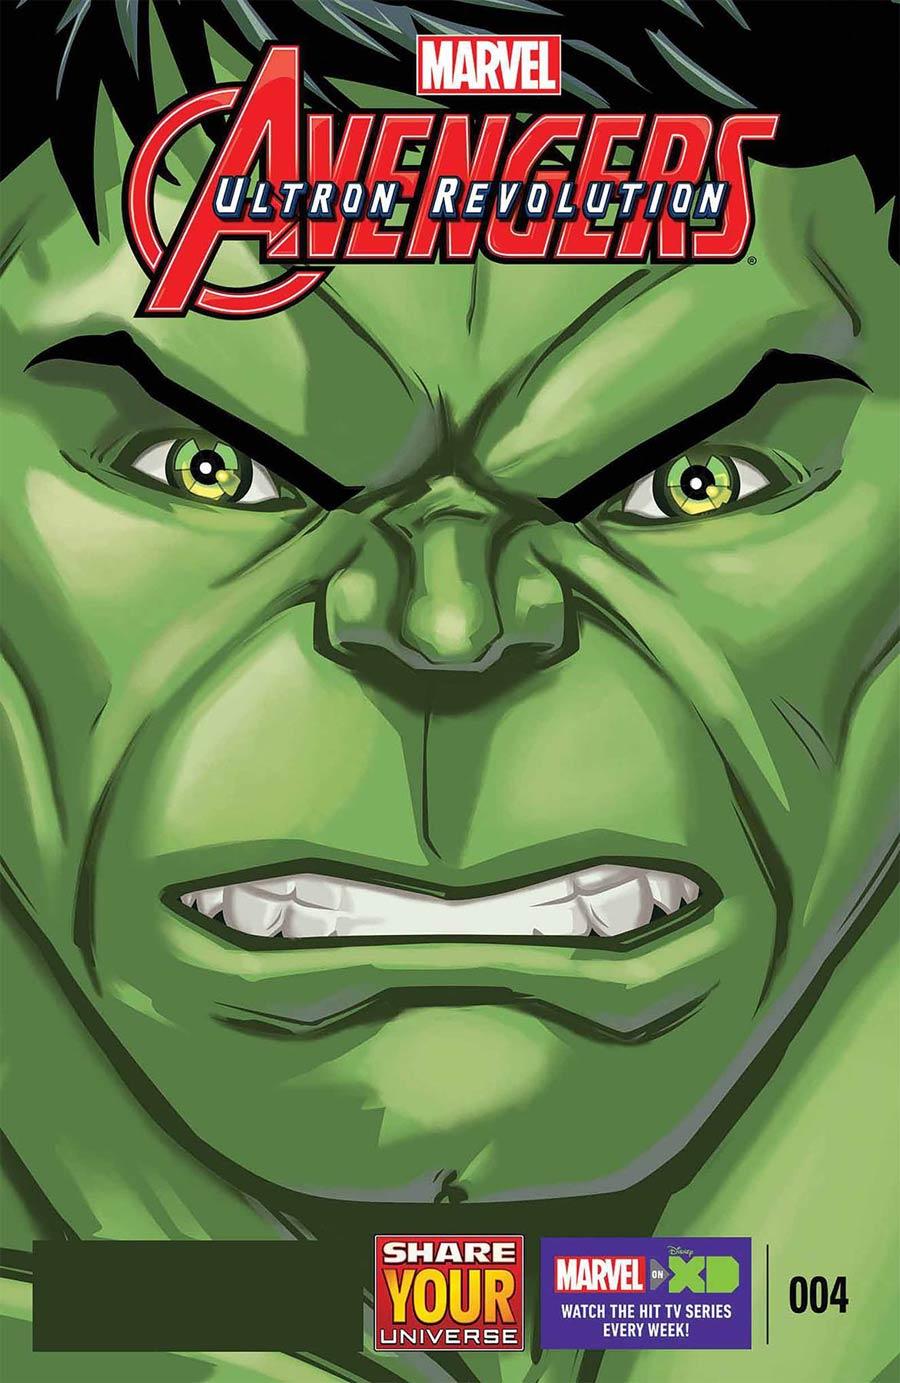 Marvel Universe Avengers Ultron Revolution Vol. 1 #4